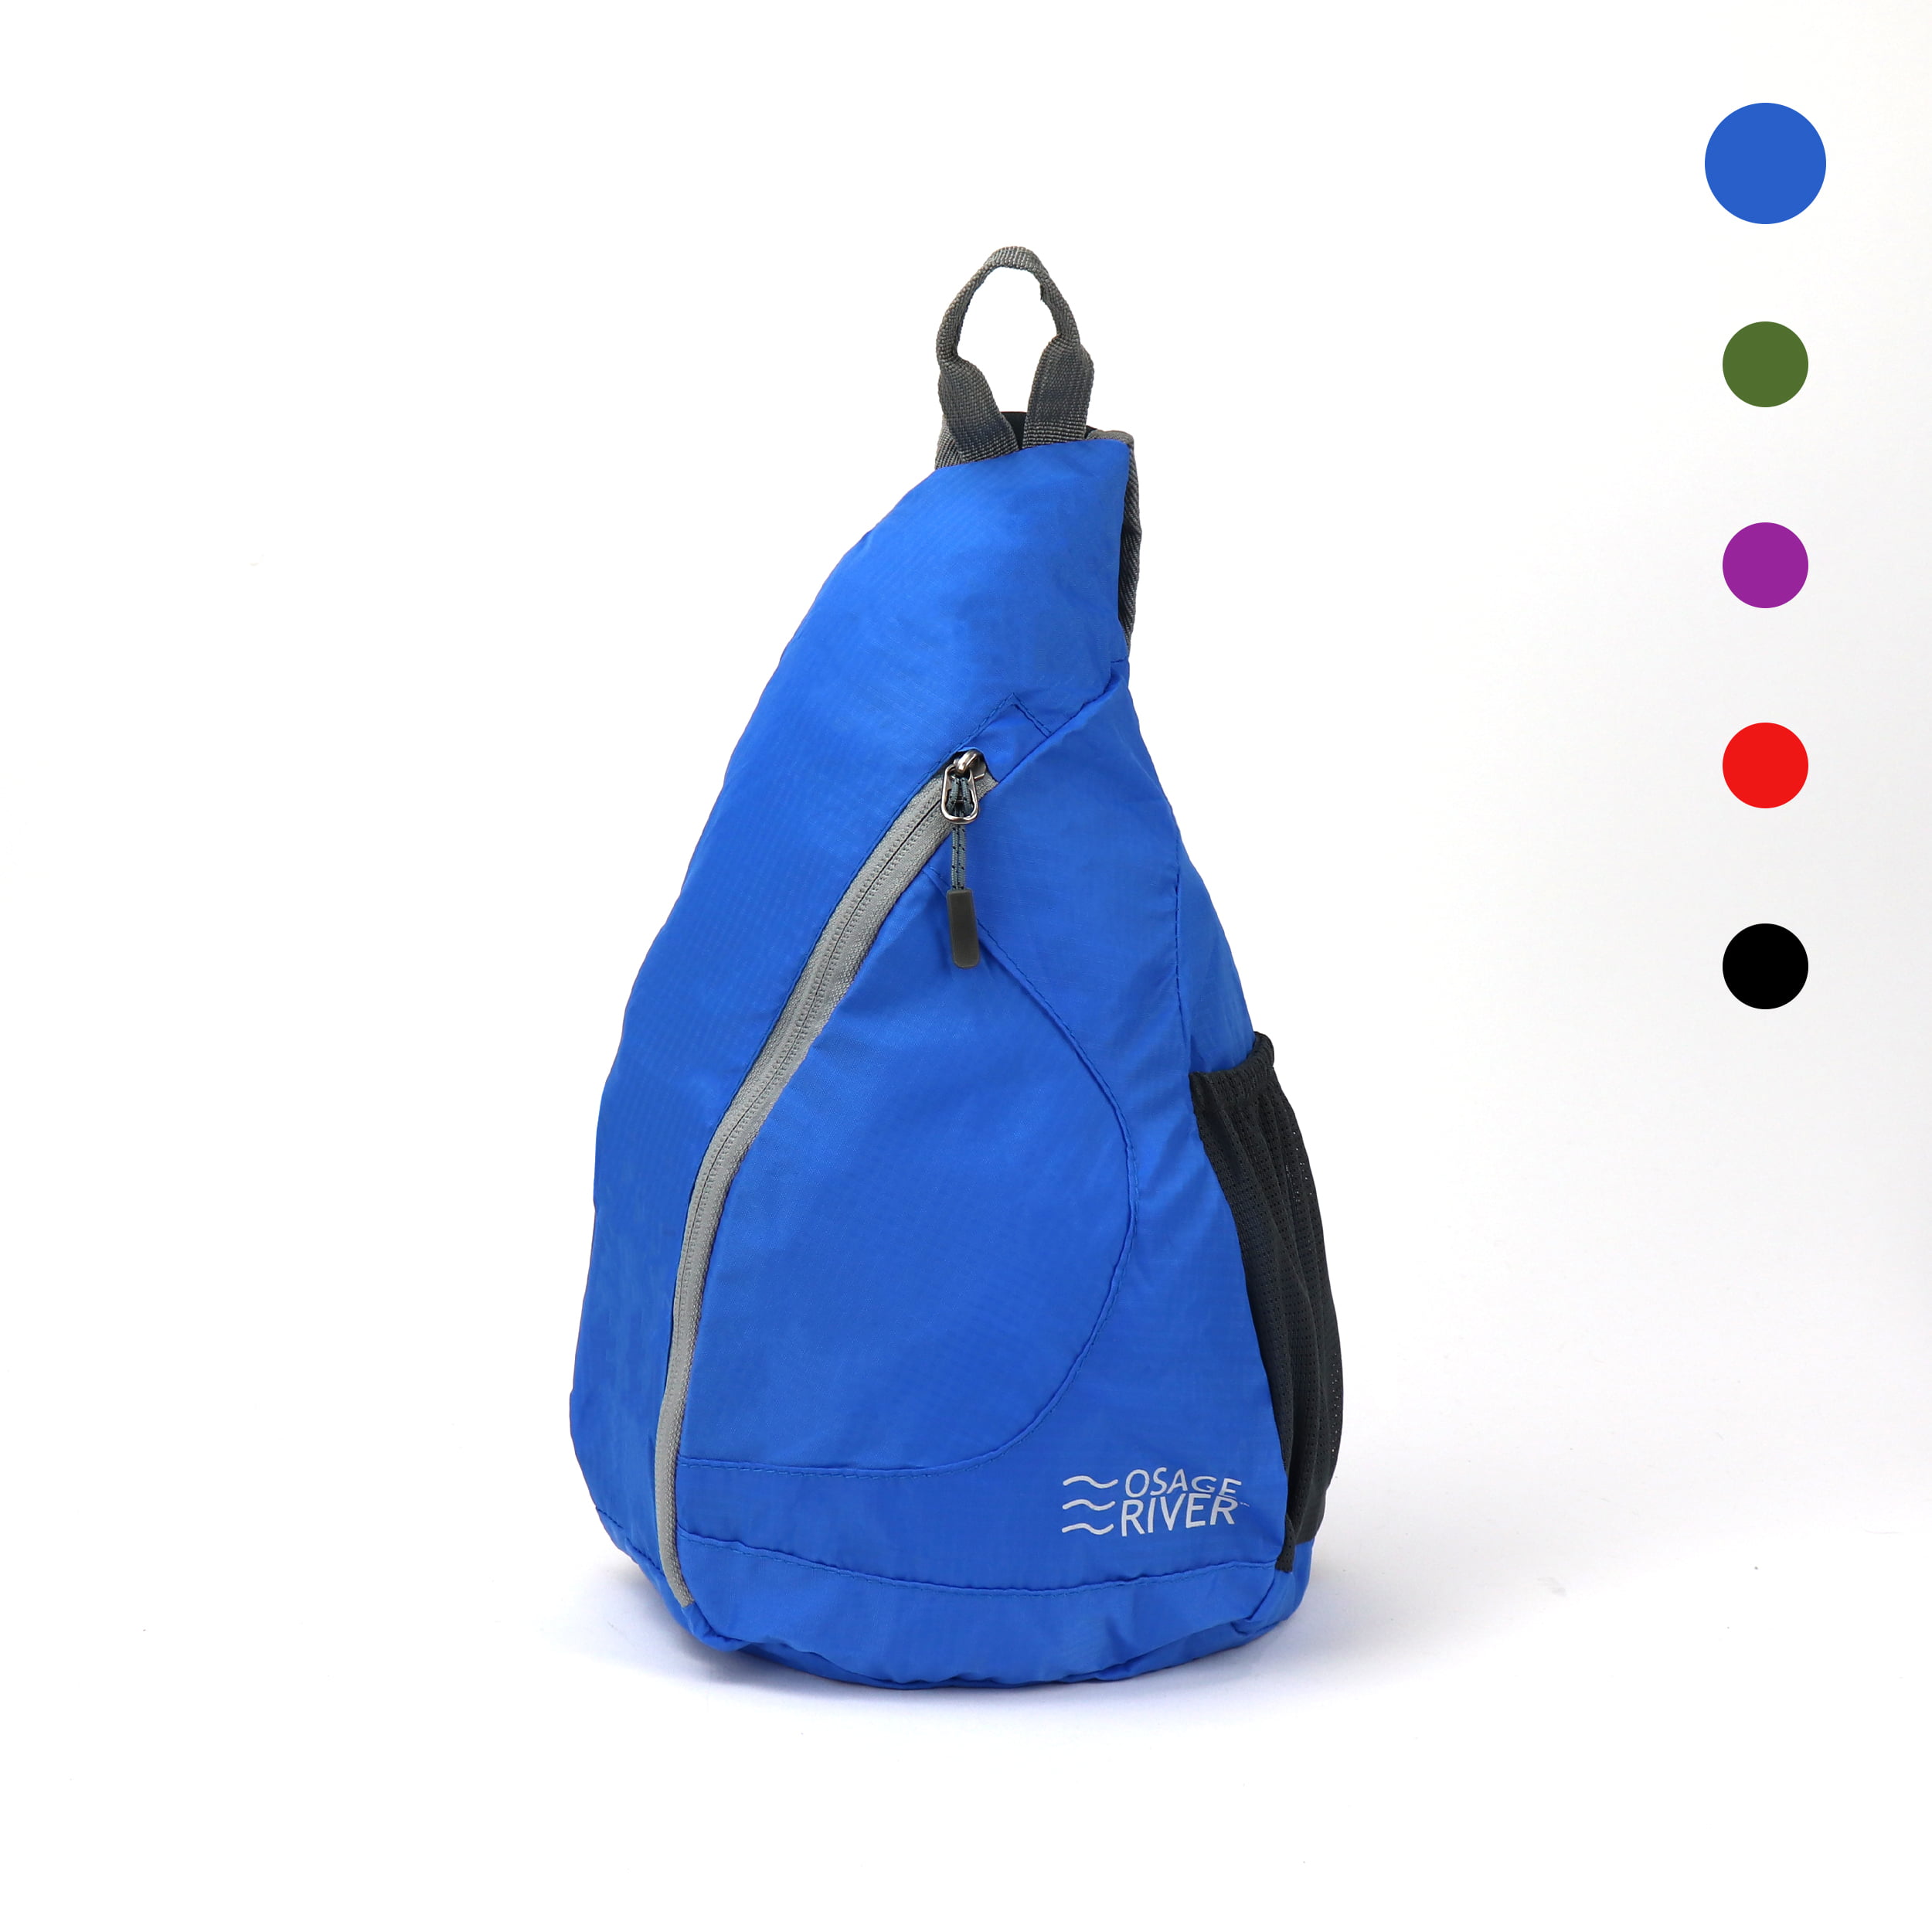 Blue Water Ripple HAWEE Sling Bag Waterproof Backpack or Crossbody Daypack Hiking Backpack Chest Sports Travel Bags for Women